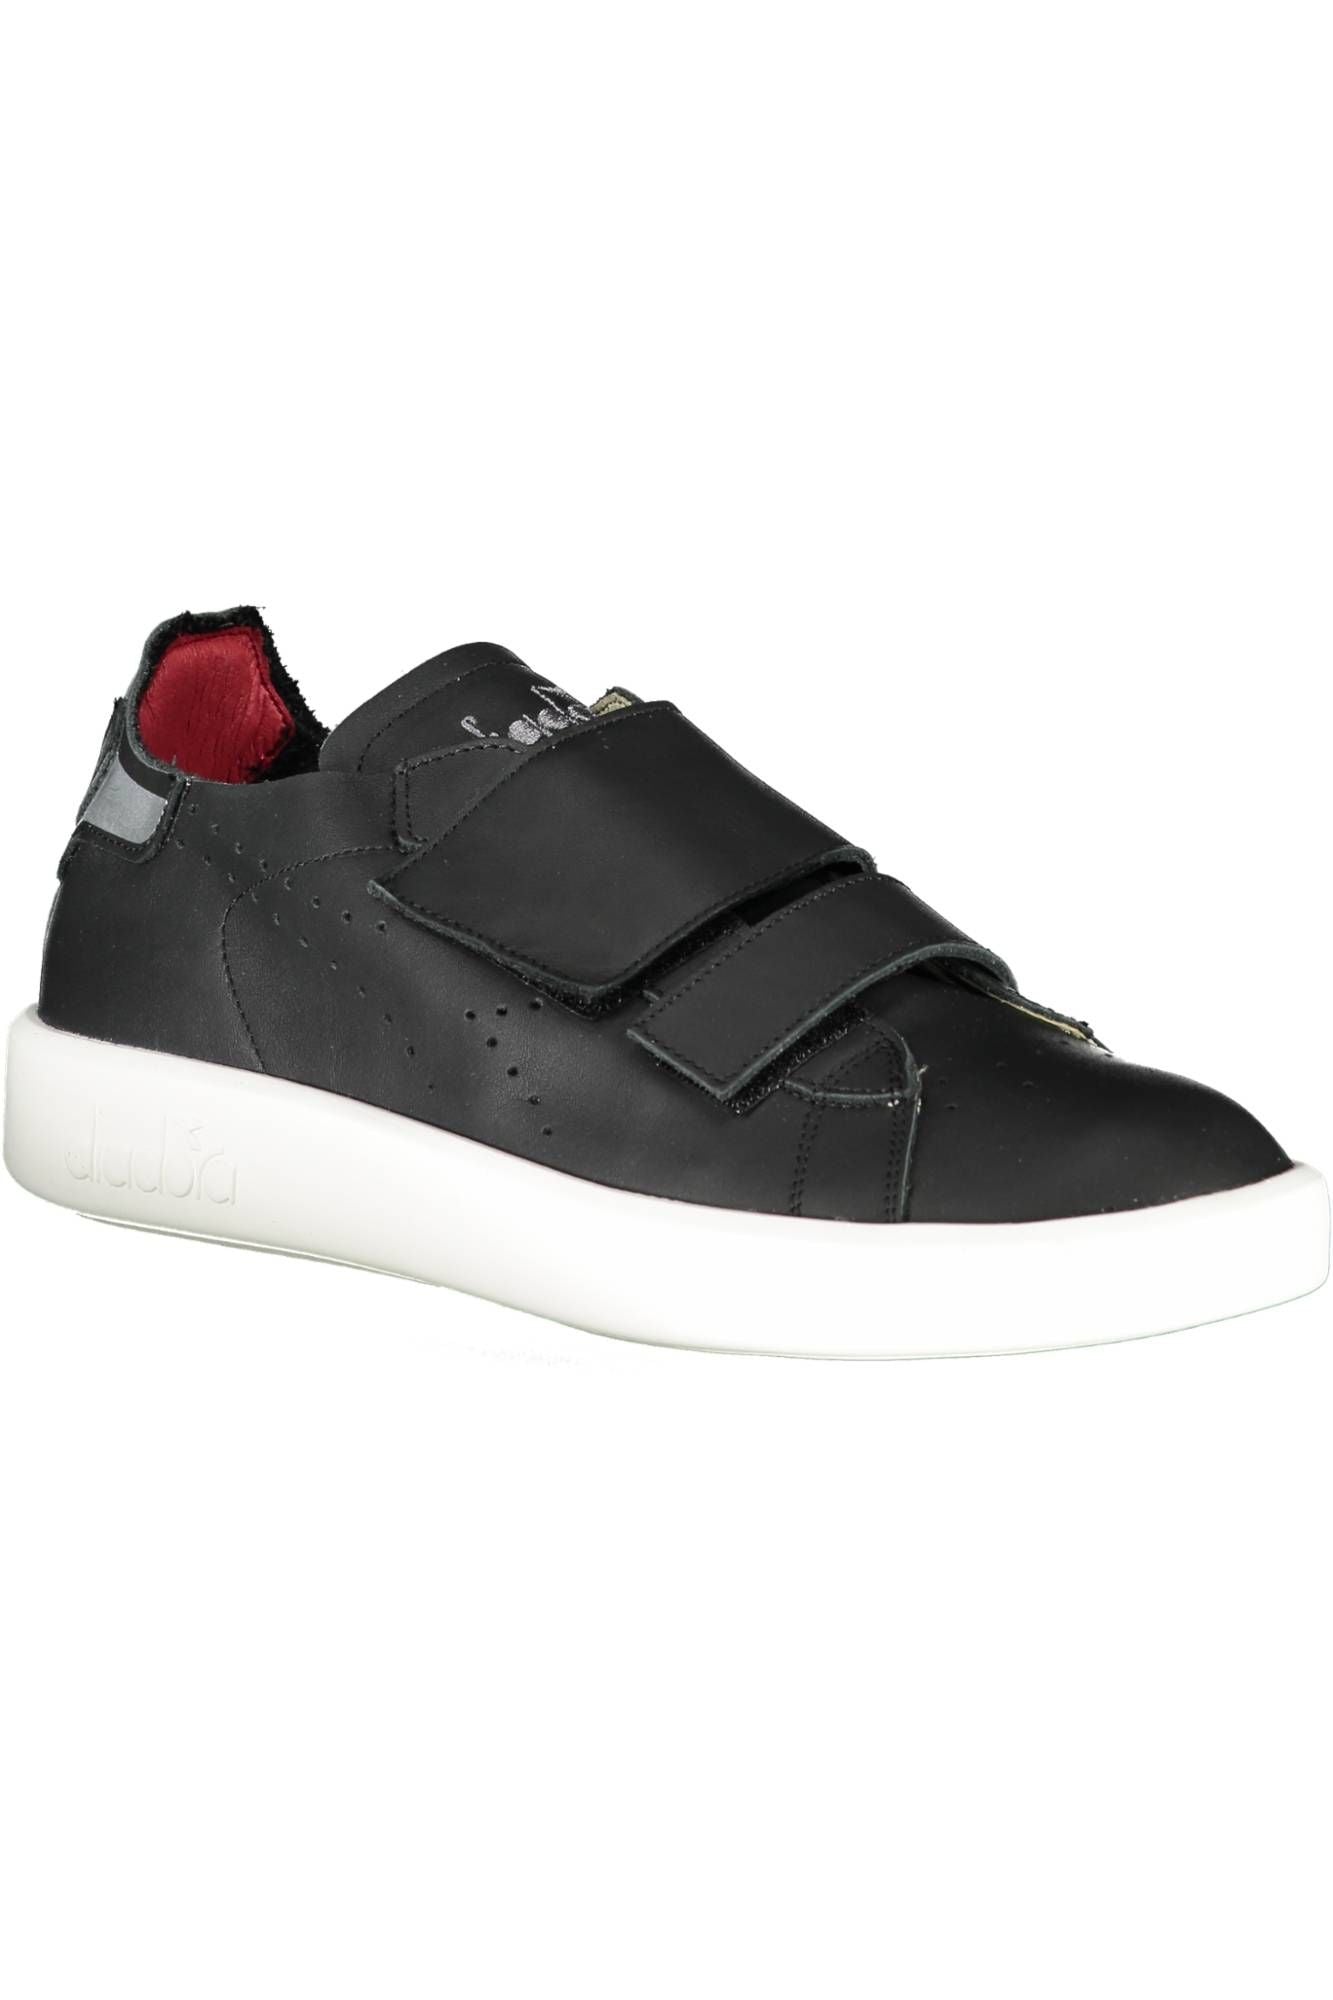 Diadora Black Leather Sneaker